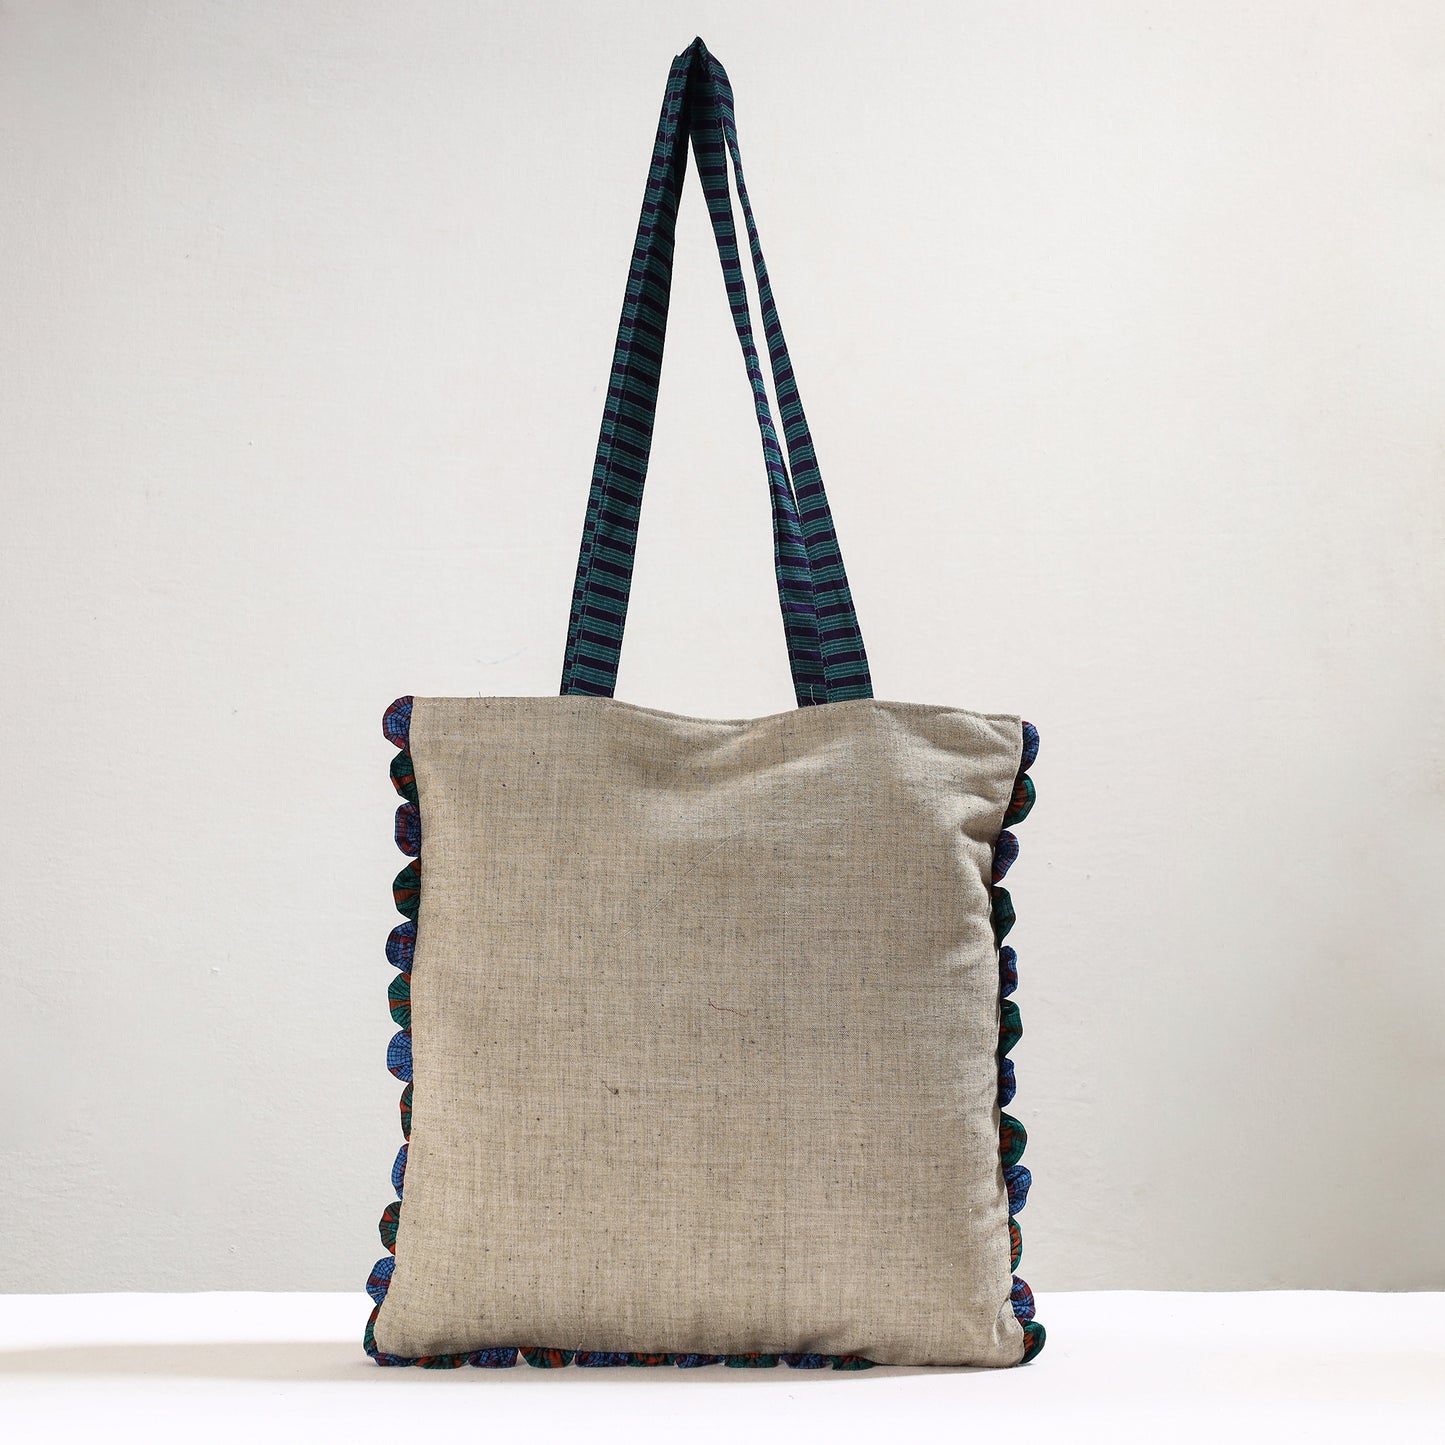 Handmade Gamcha Fabric Embroidered Applique Work Hand Bag